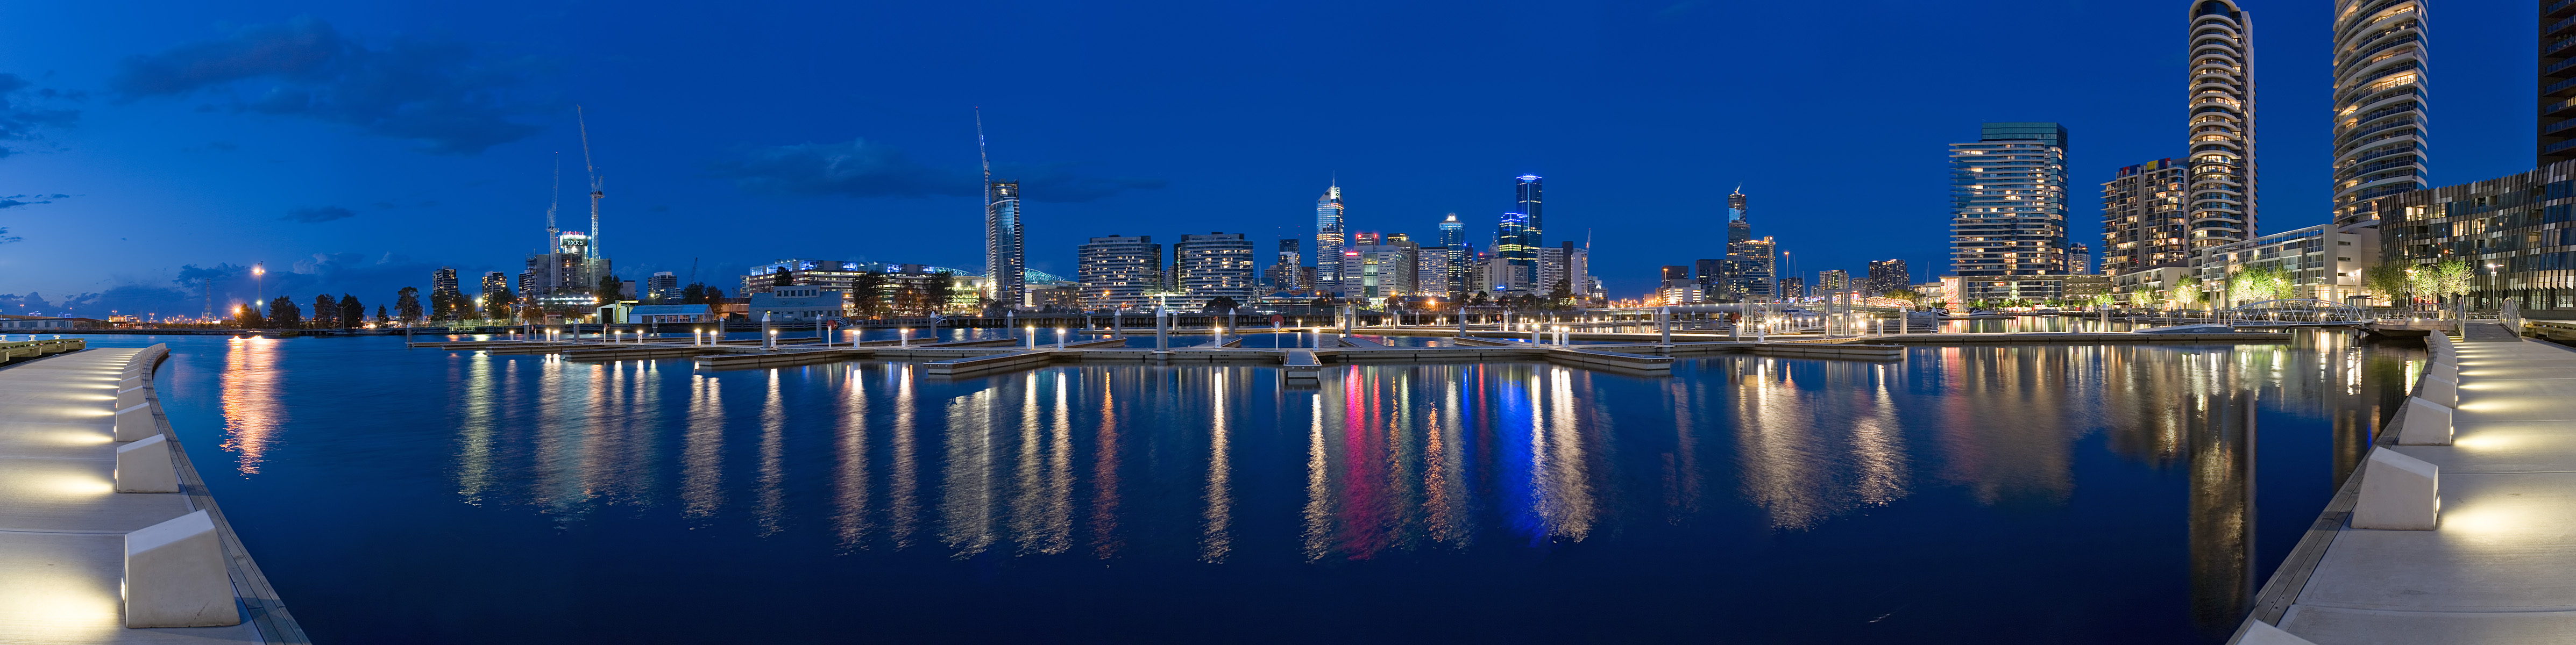 File:Melbourne Docklands - Yarras Edge - marina panorama.jpg - Wikipedia